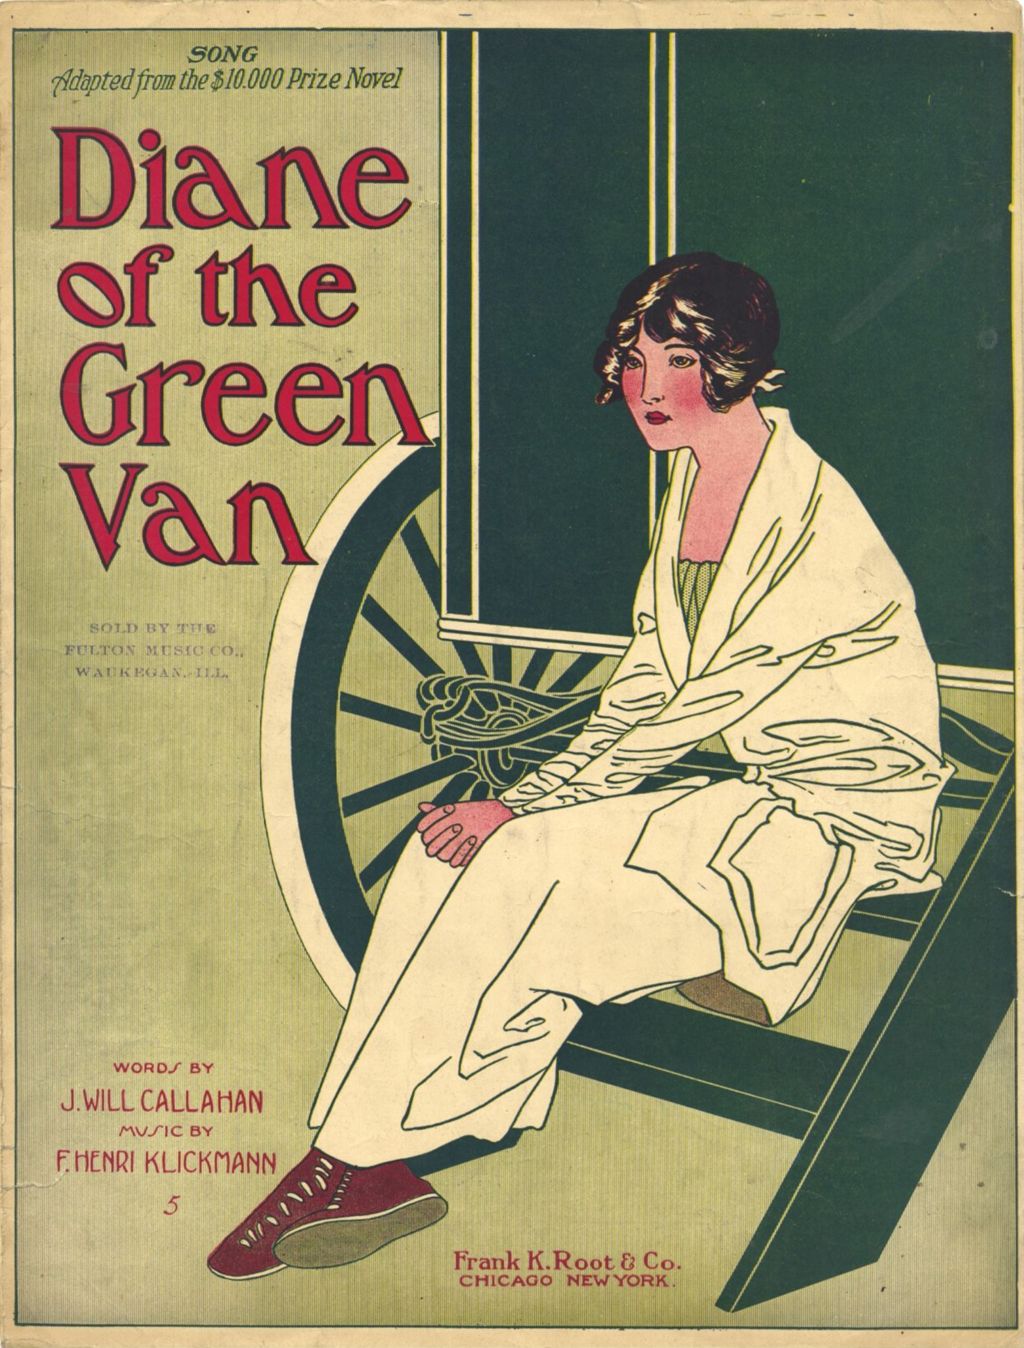 Miniature of Diane of the Green Van